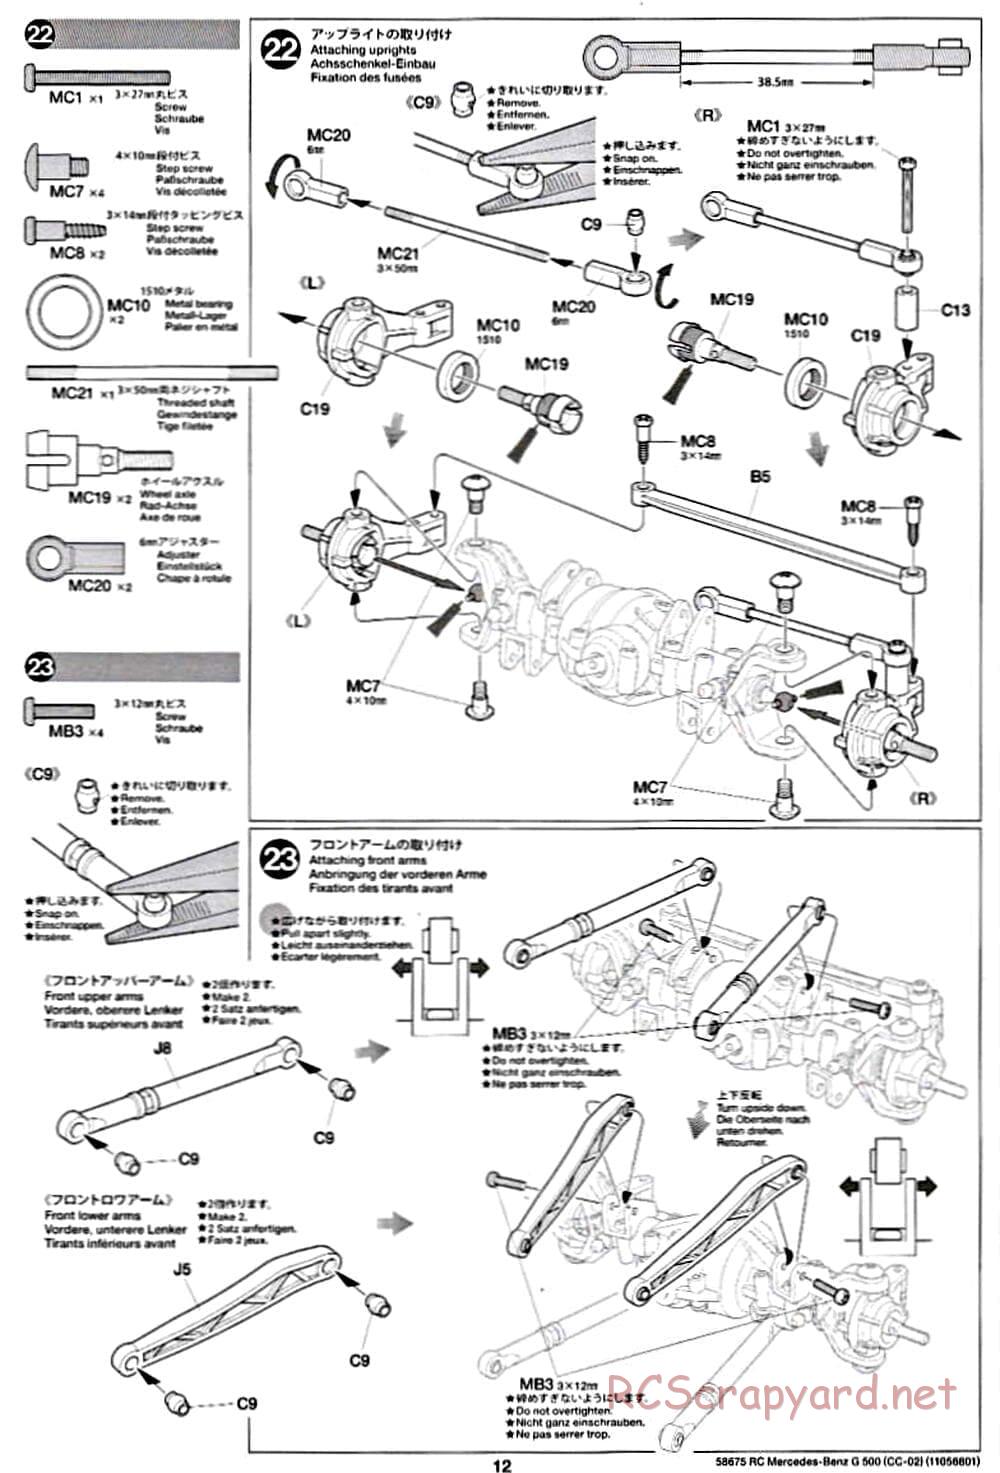 Tamiya - Mercedes-Benz G500 - CC-02 Chassis - Manual - Page 12